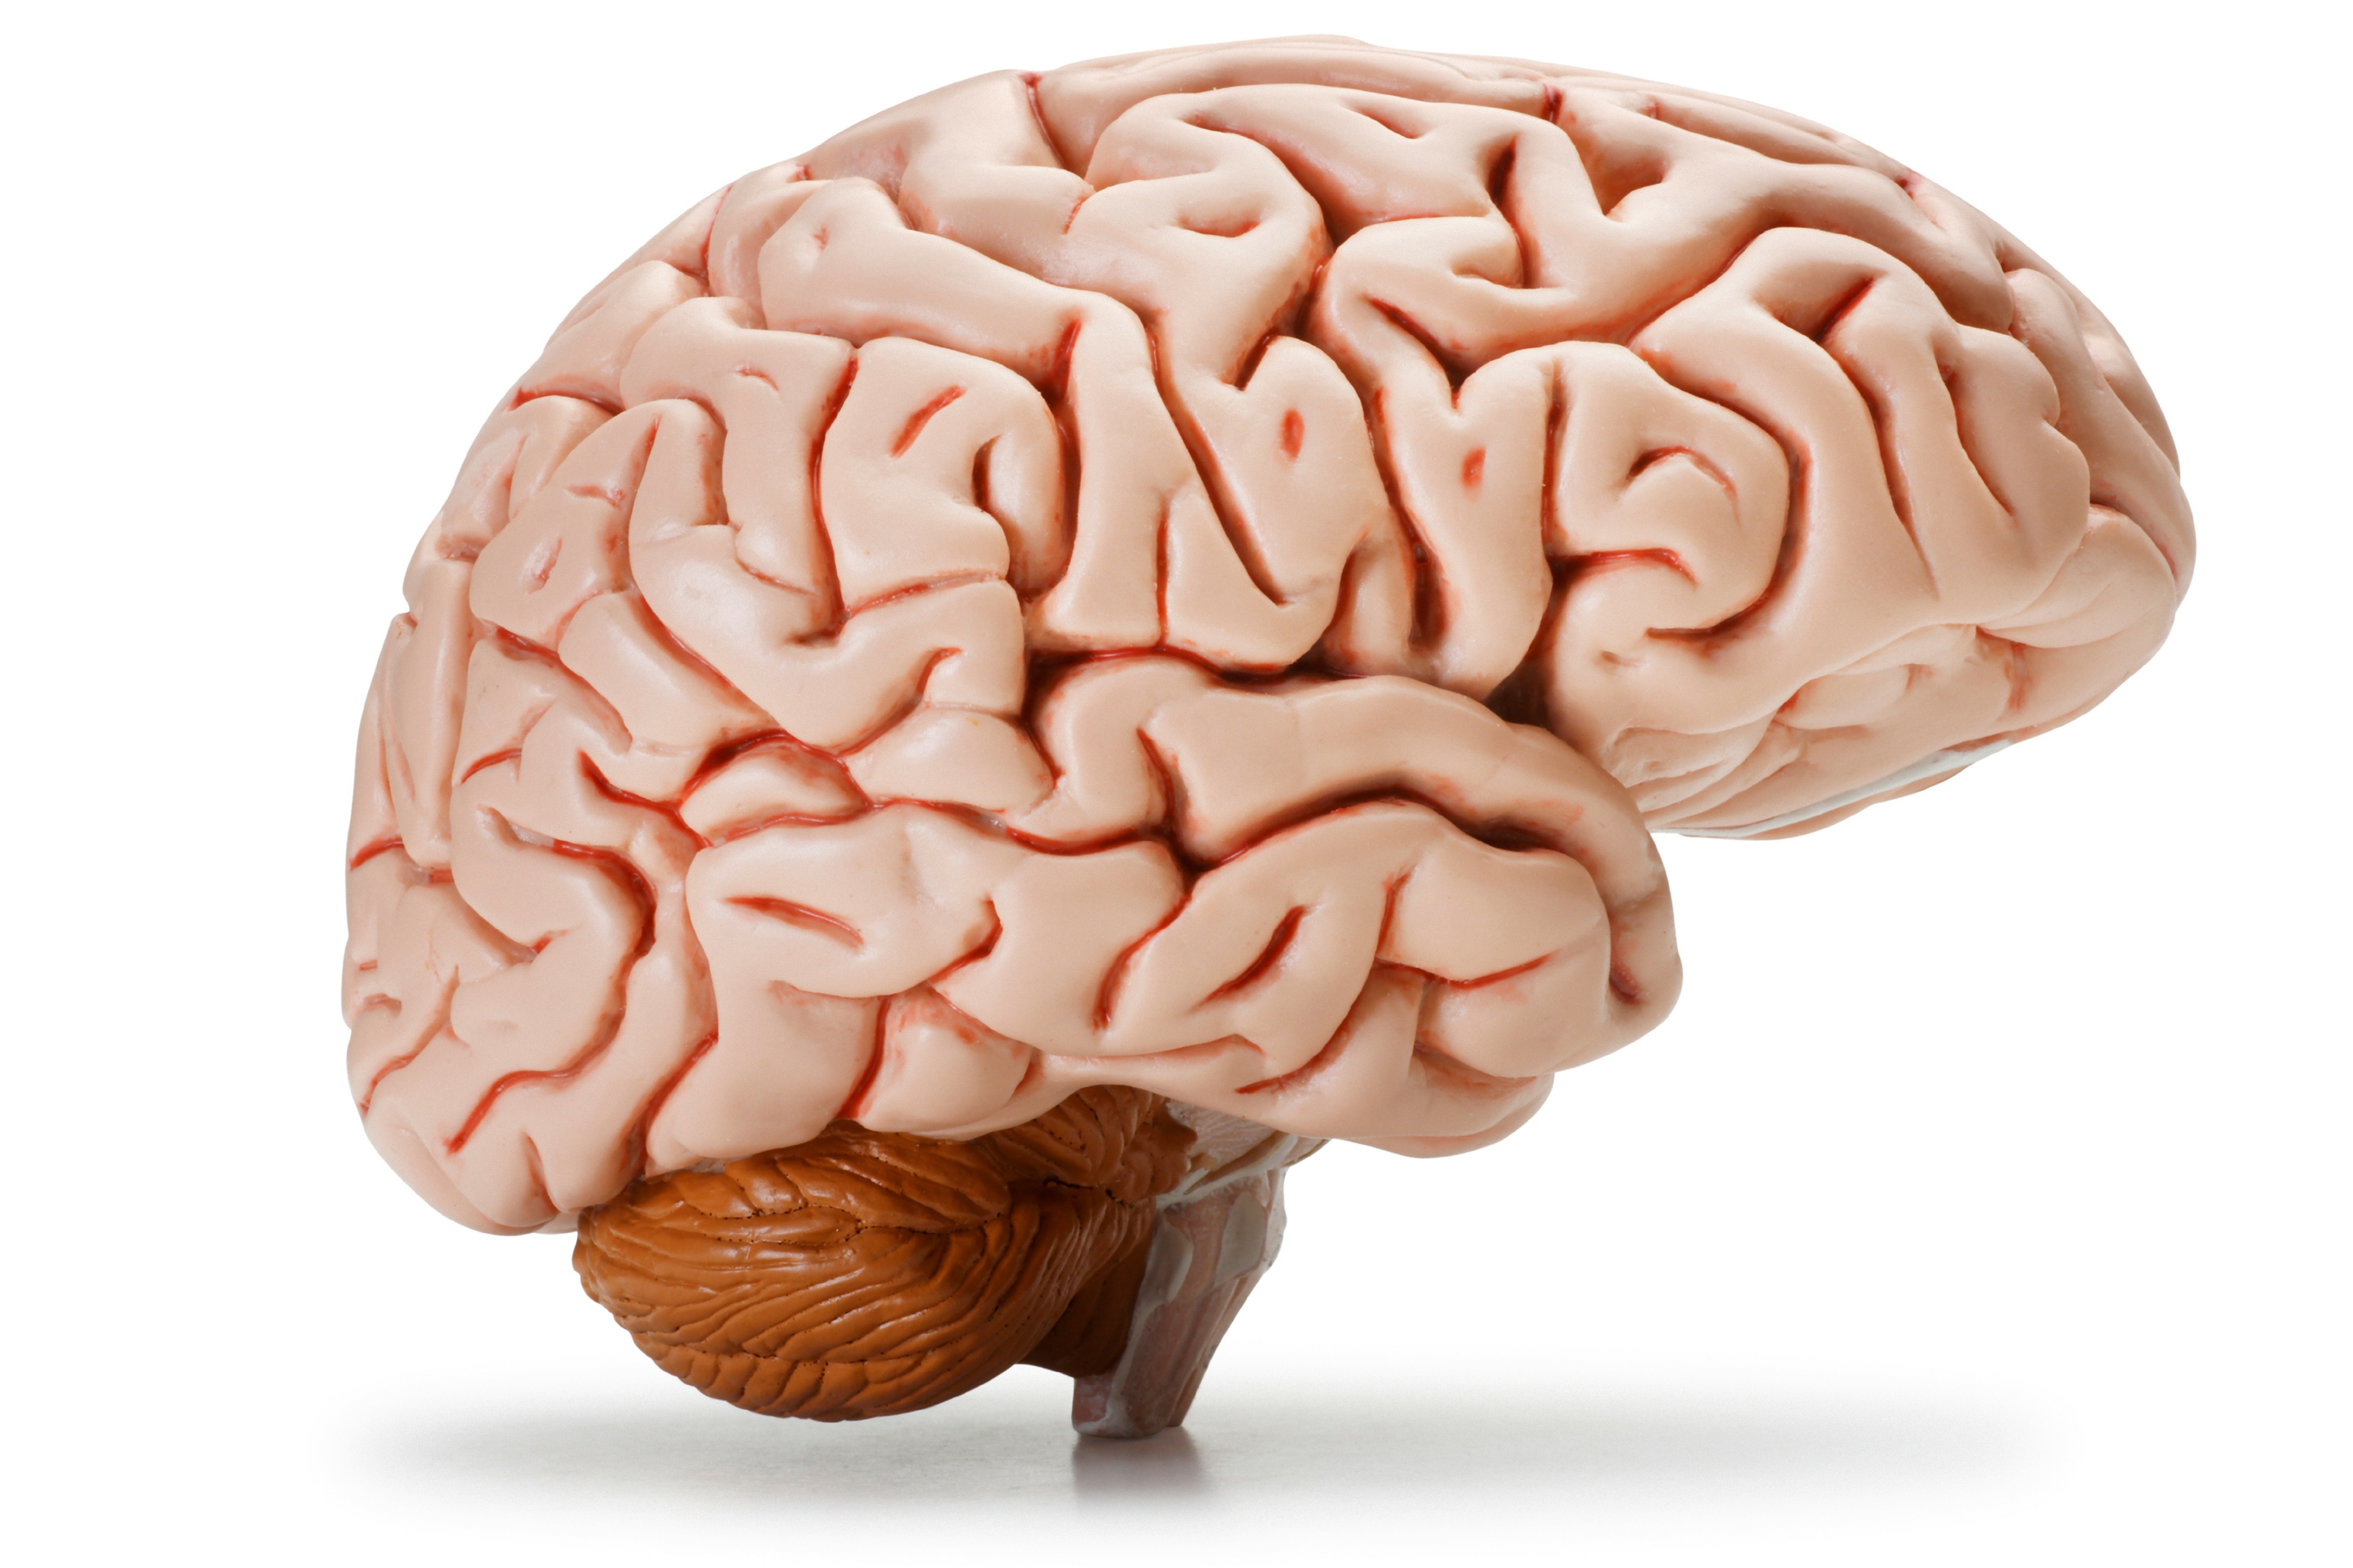 Brain 259. Изображение мозга человека.